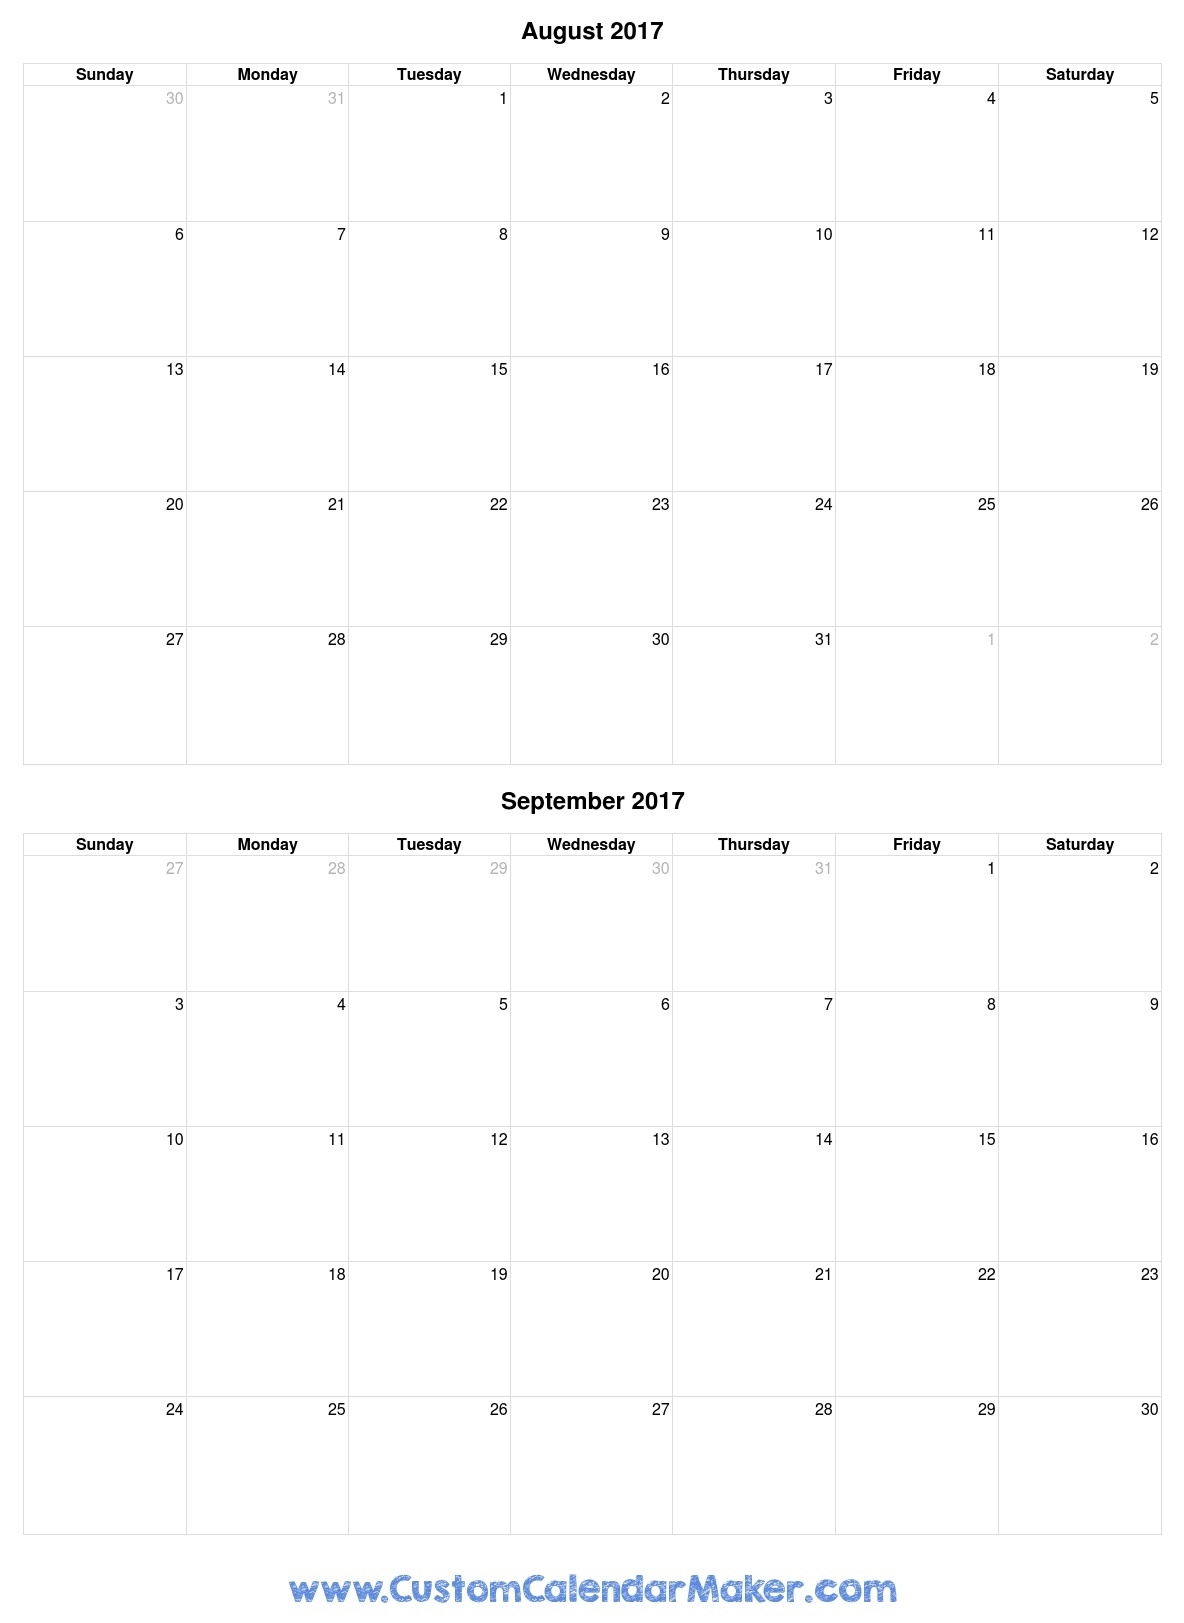 August And September 2017 Free Printable Calendar  August And Septembercalendar Free Printables